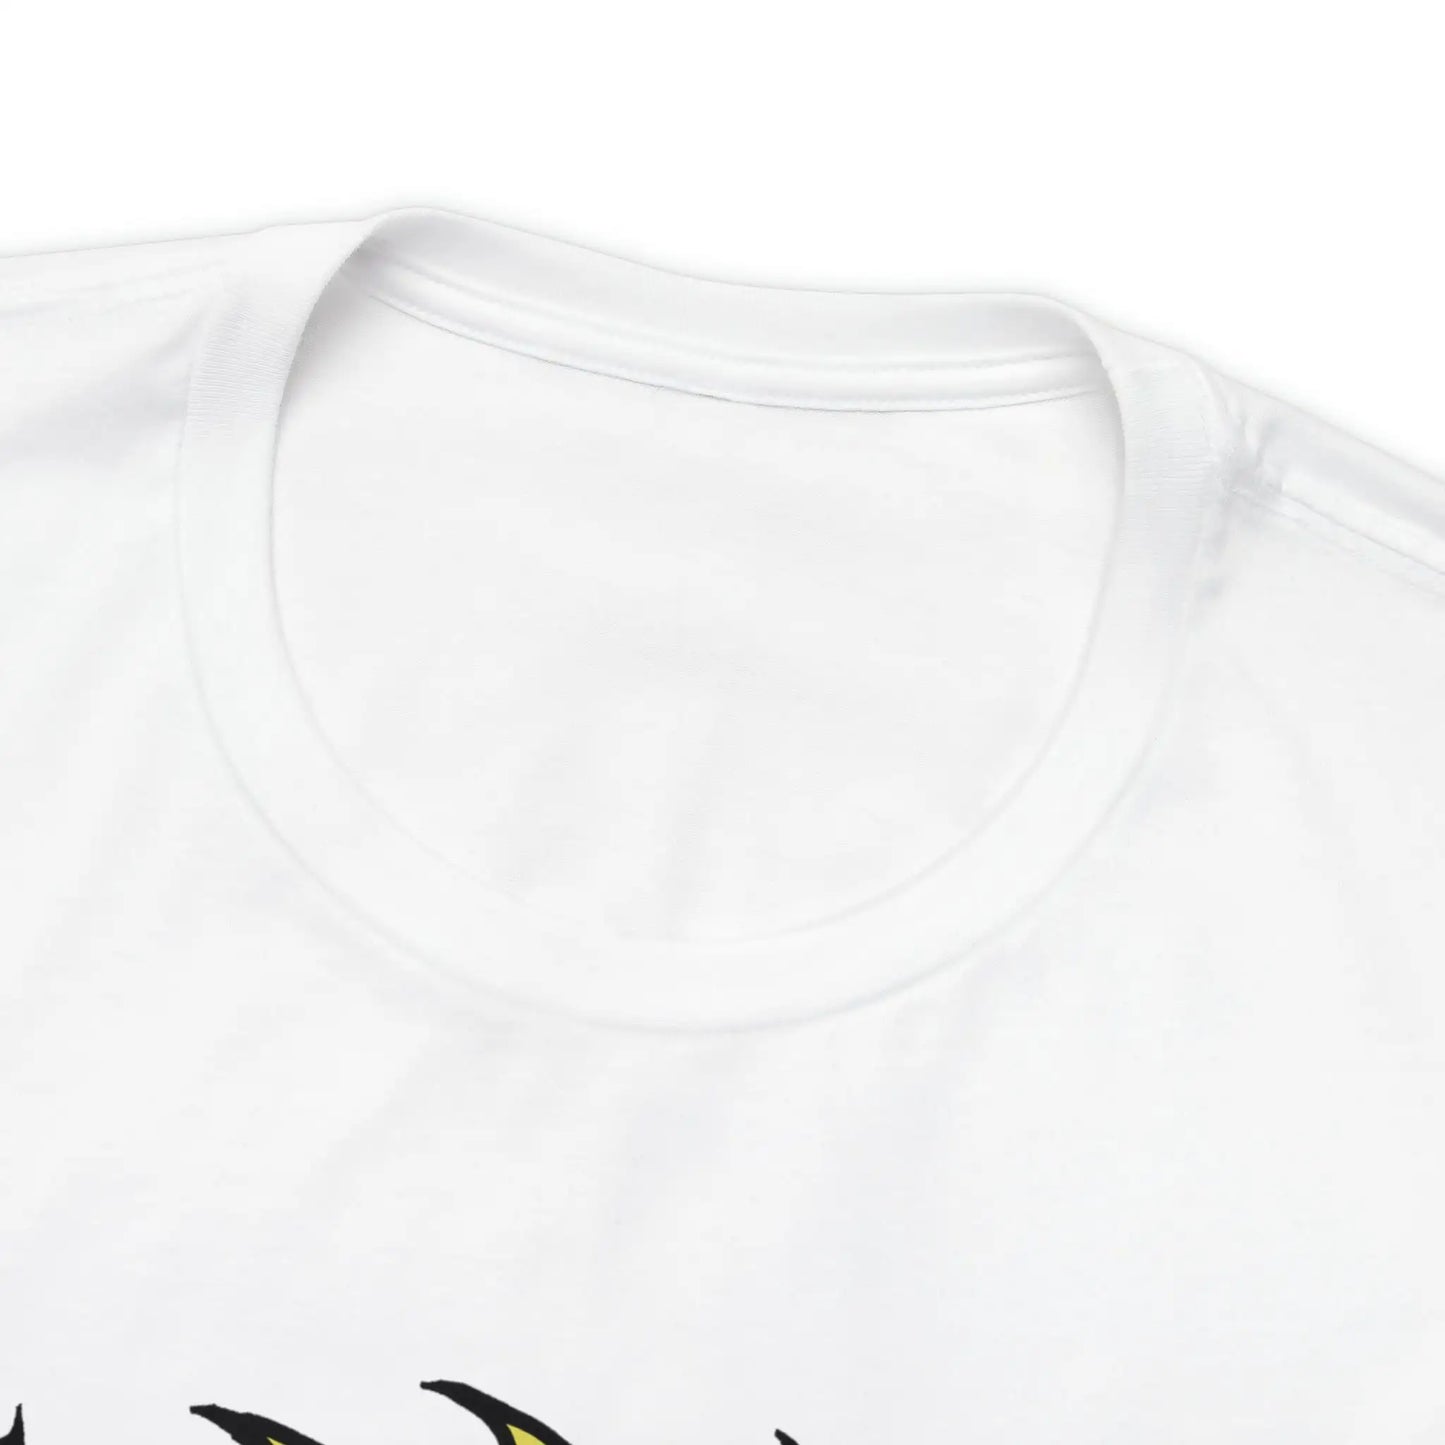 Junkrat Overwatch T-Shirt Cartoon Chibi Style Gift Tee Unisex For Men and Women